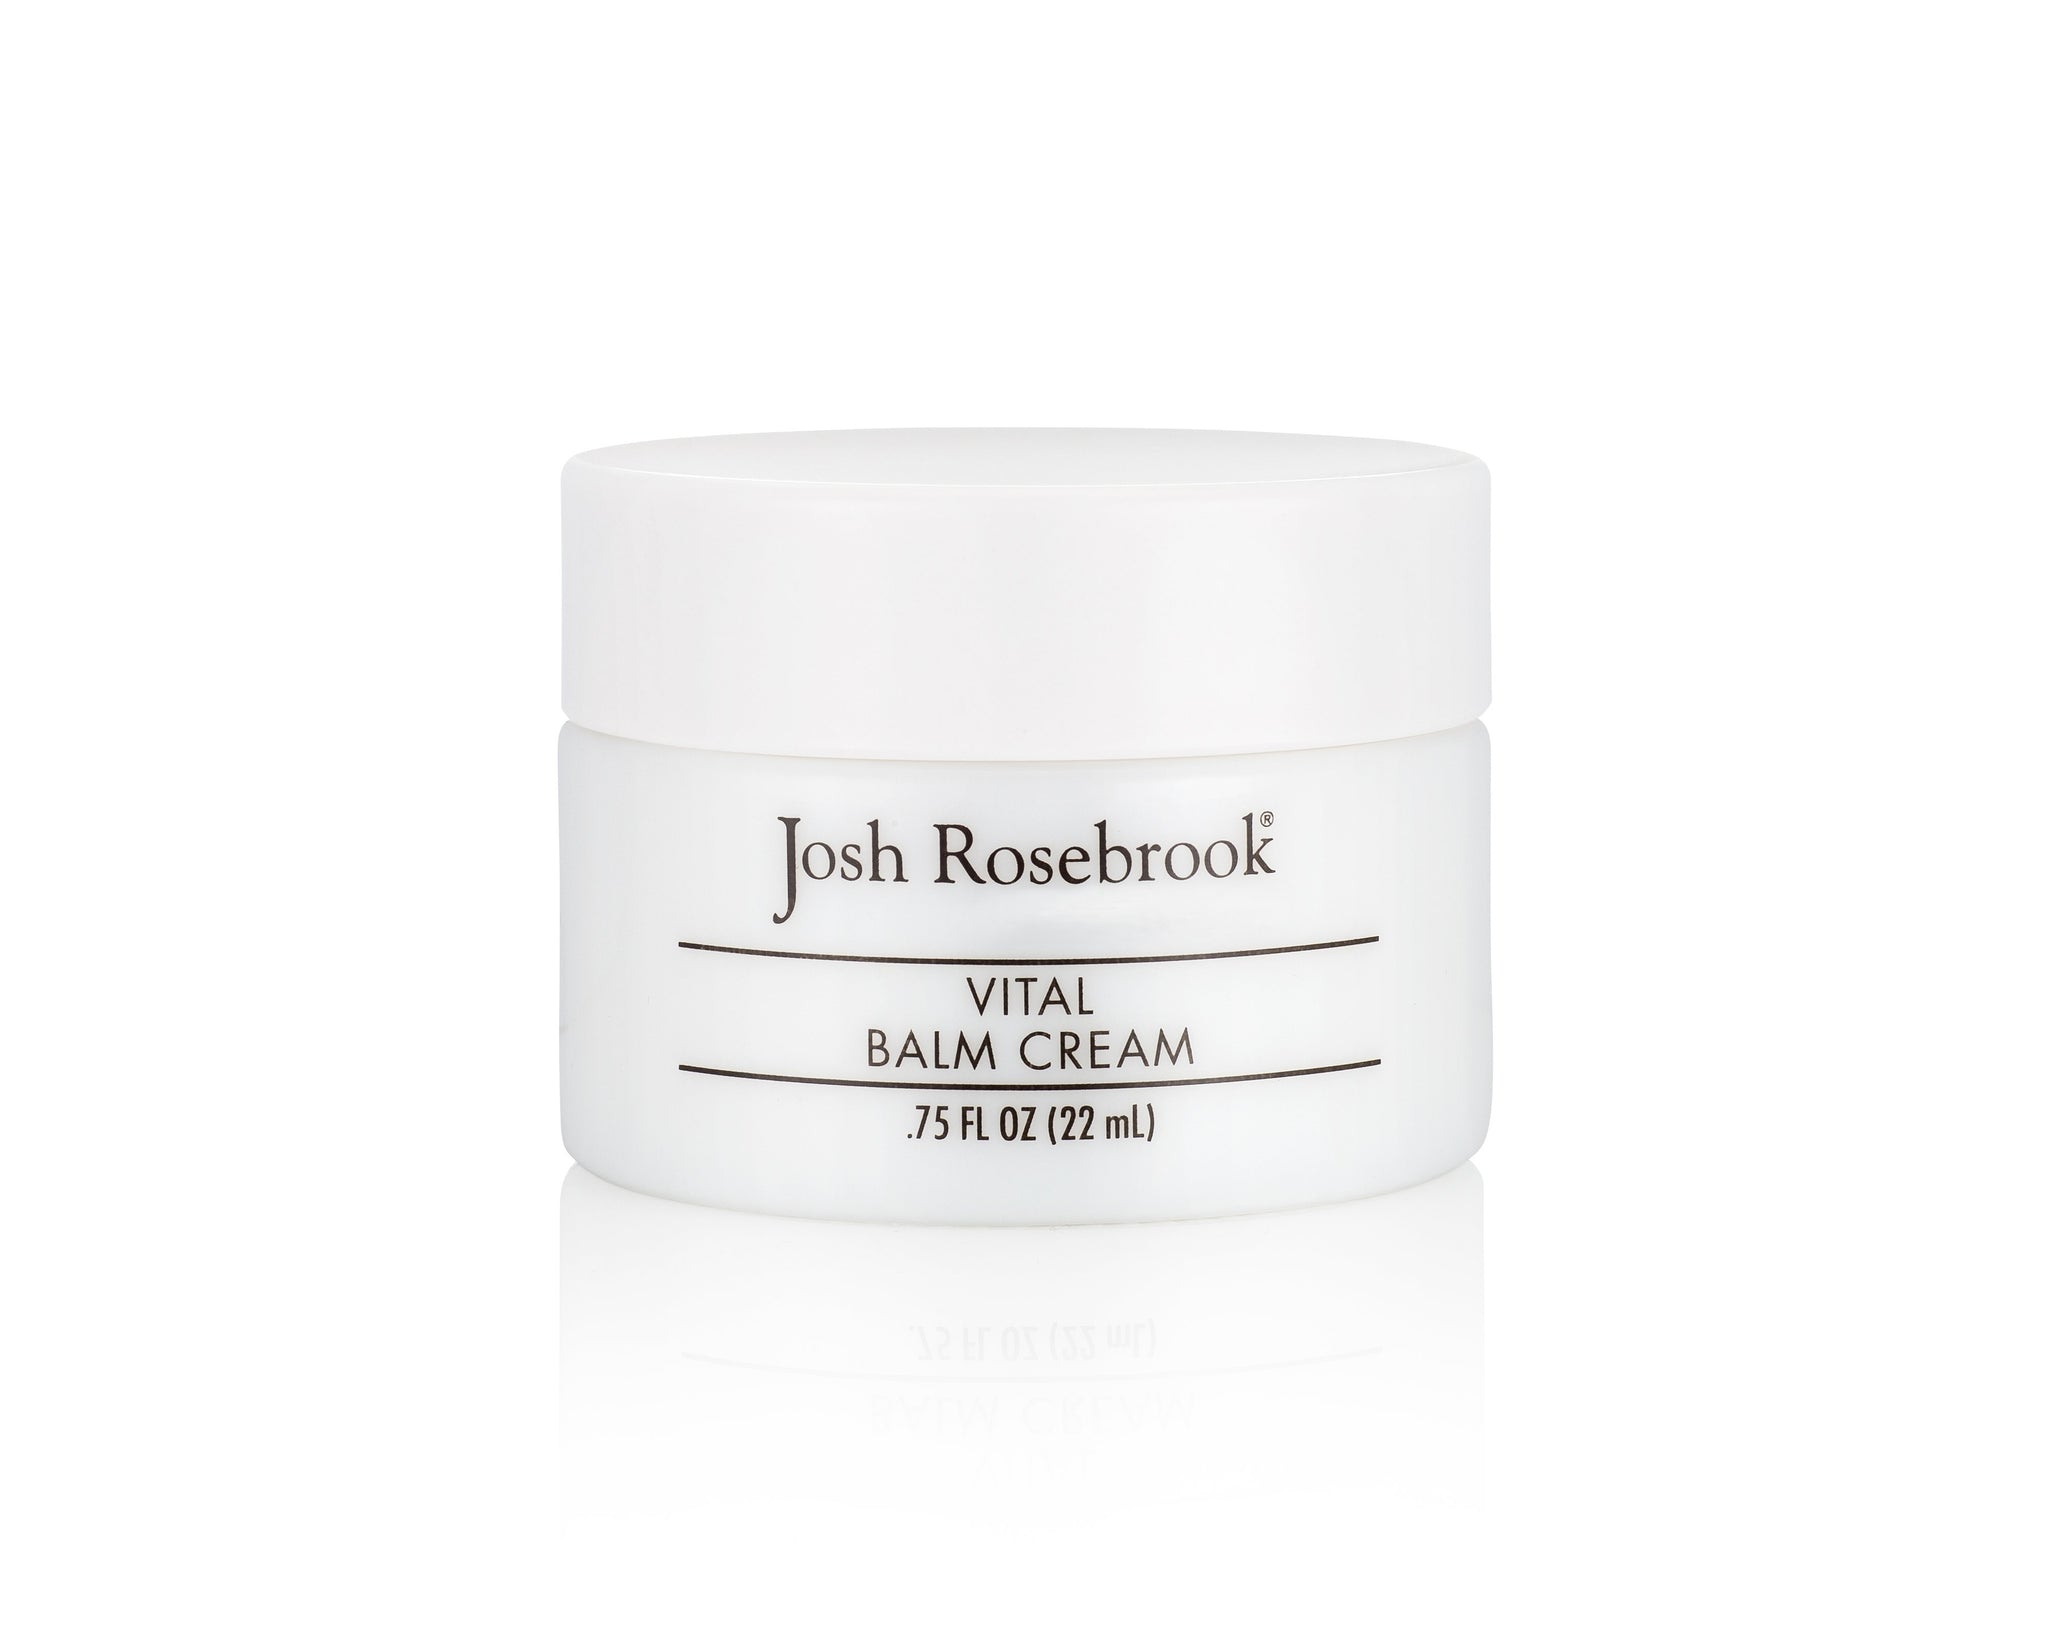 Josh Rosebrook Vital Balm Cream